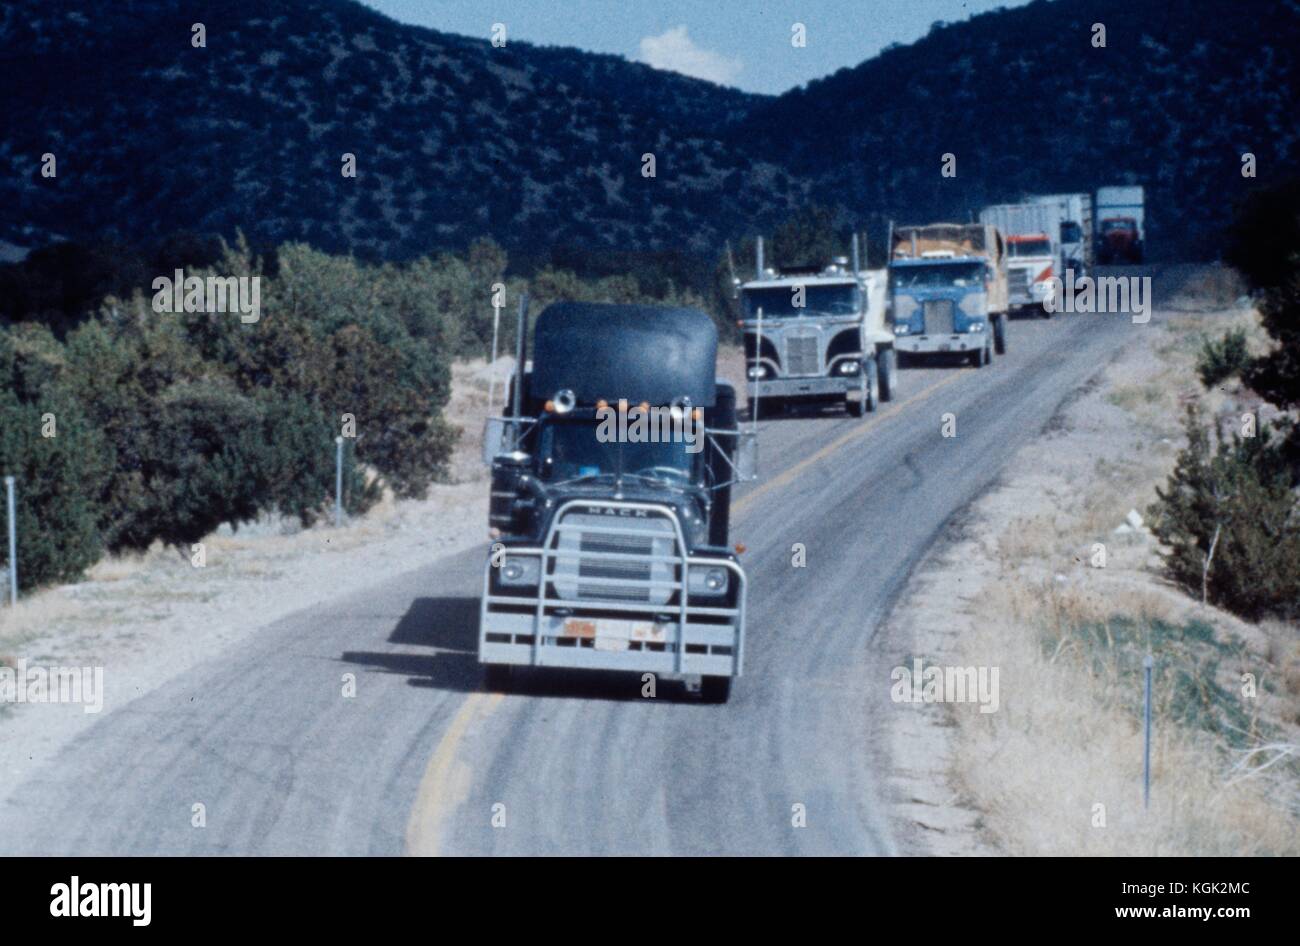 File:Convoy Movie Truck - 7355660474.jpg - Wikimedia Commons